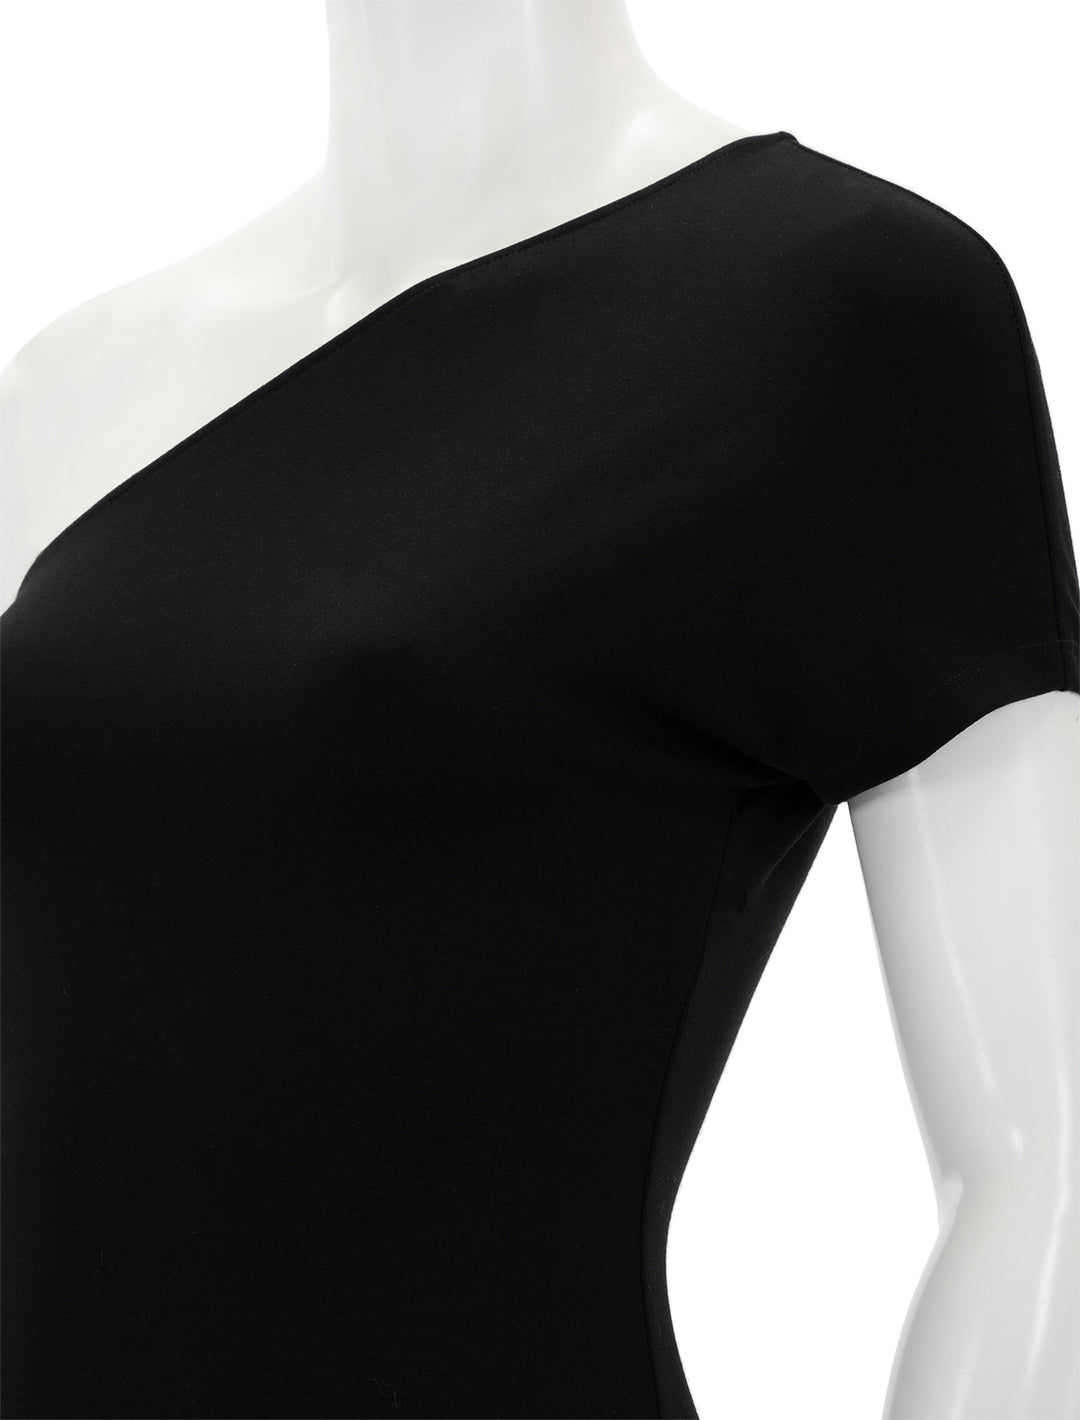 Close-up view of STAUD's adalynn dress in black.